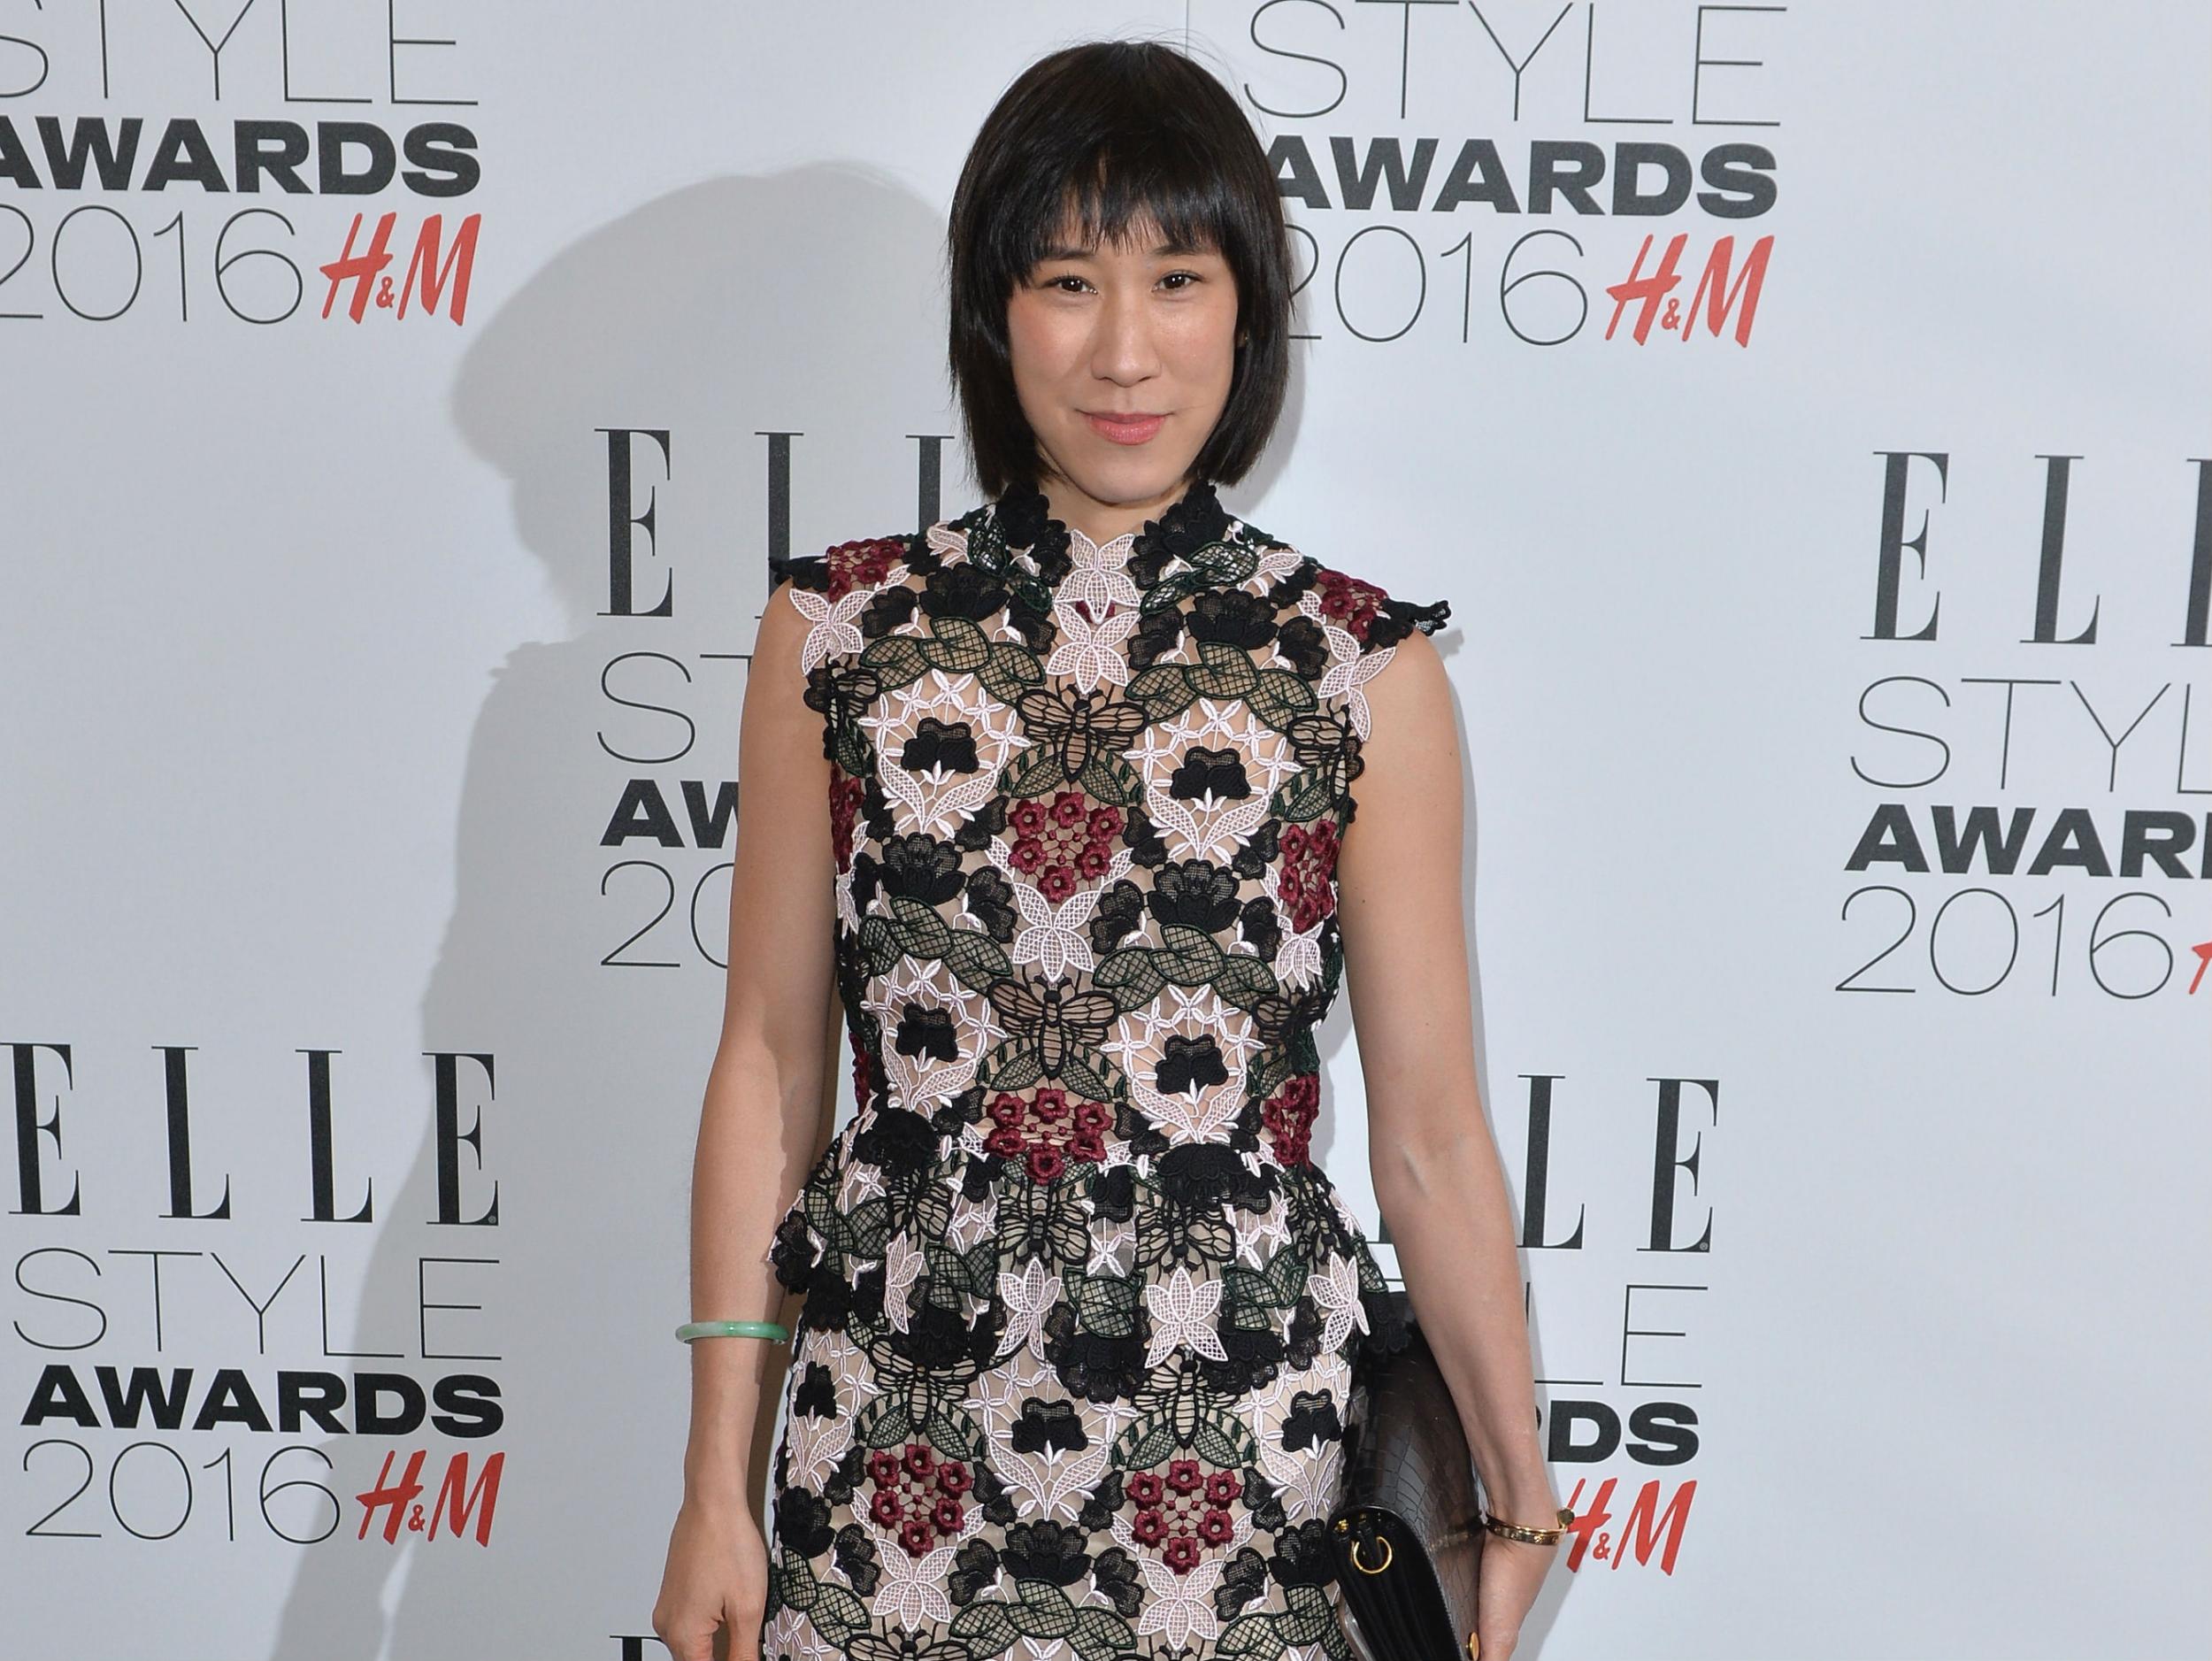 Eva Chen at the Elle Style Awards 2016